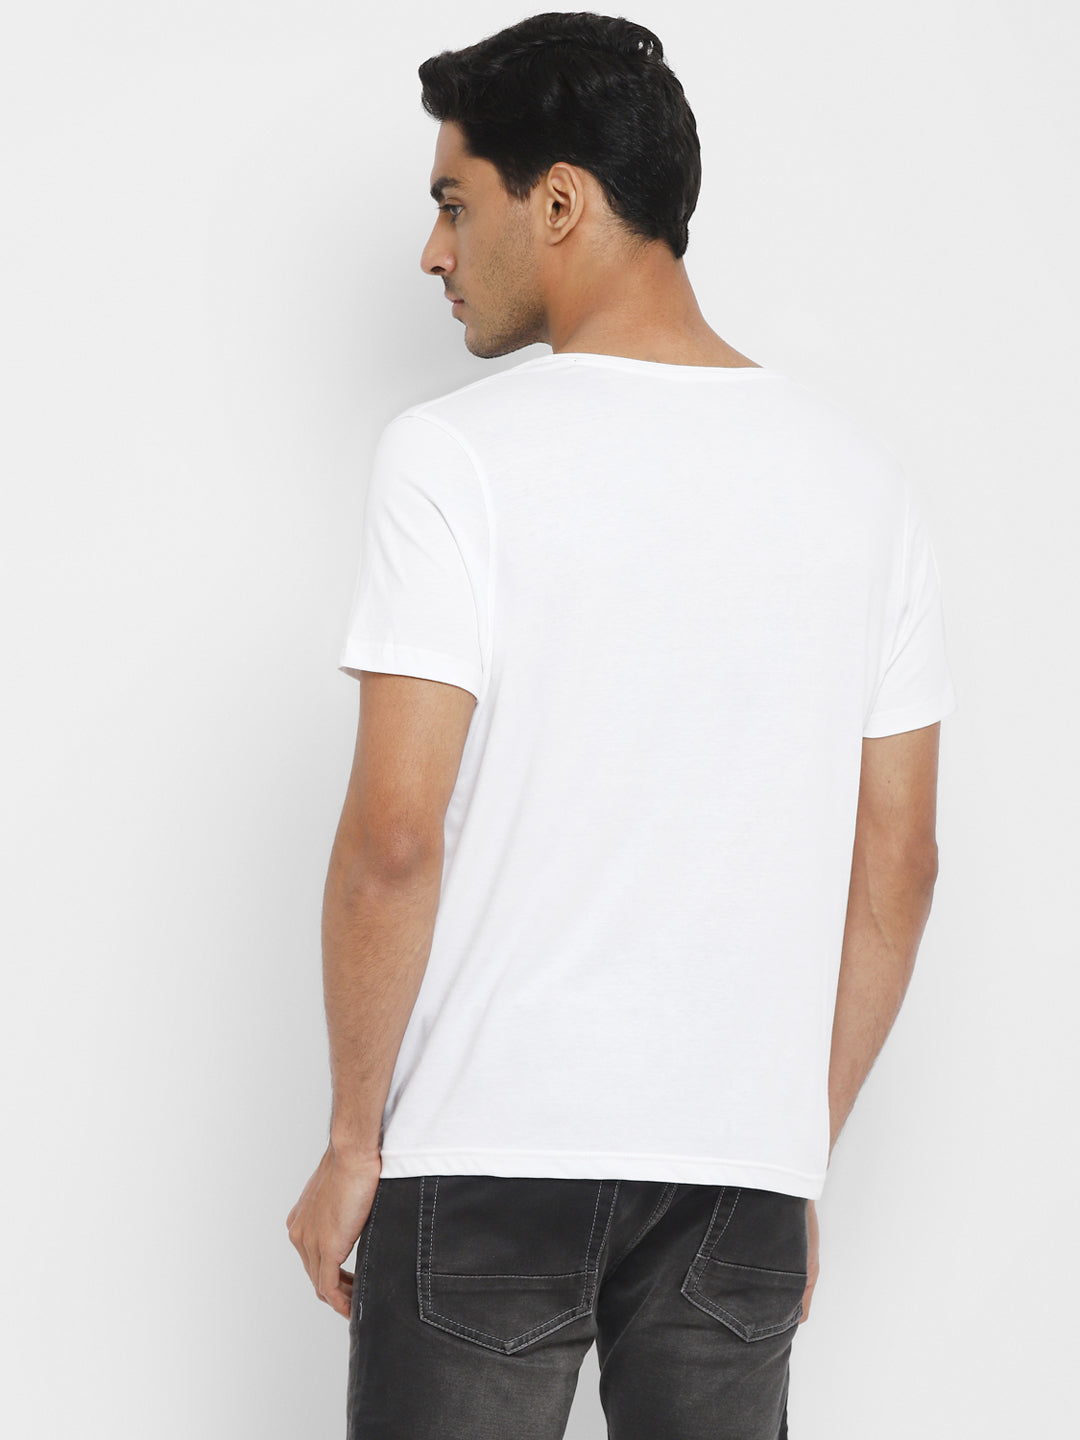 Essentials White & Cream Solid V Neck T-Shirt (Pack of 2)